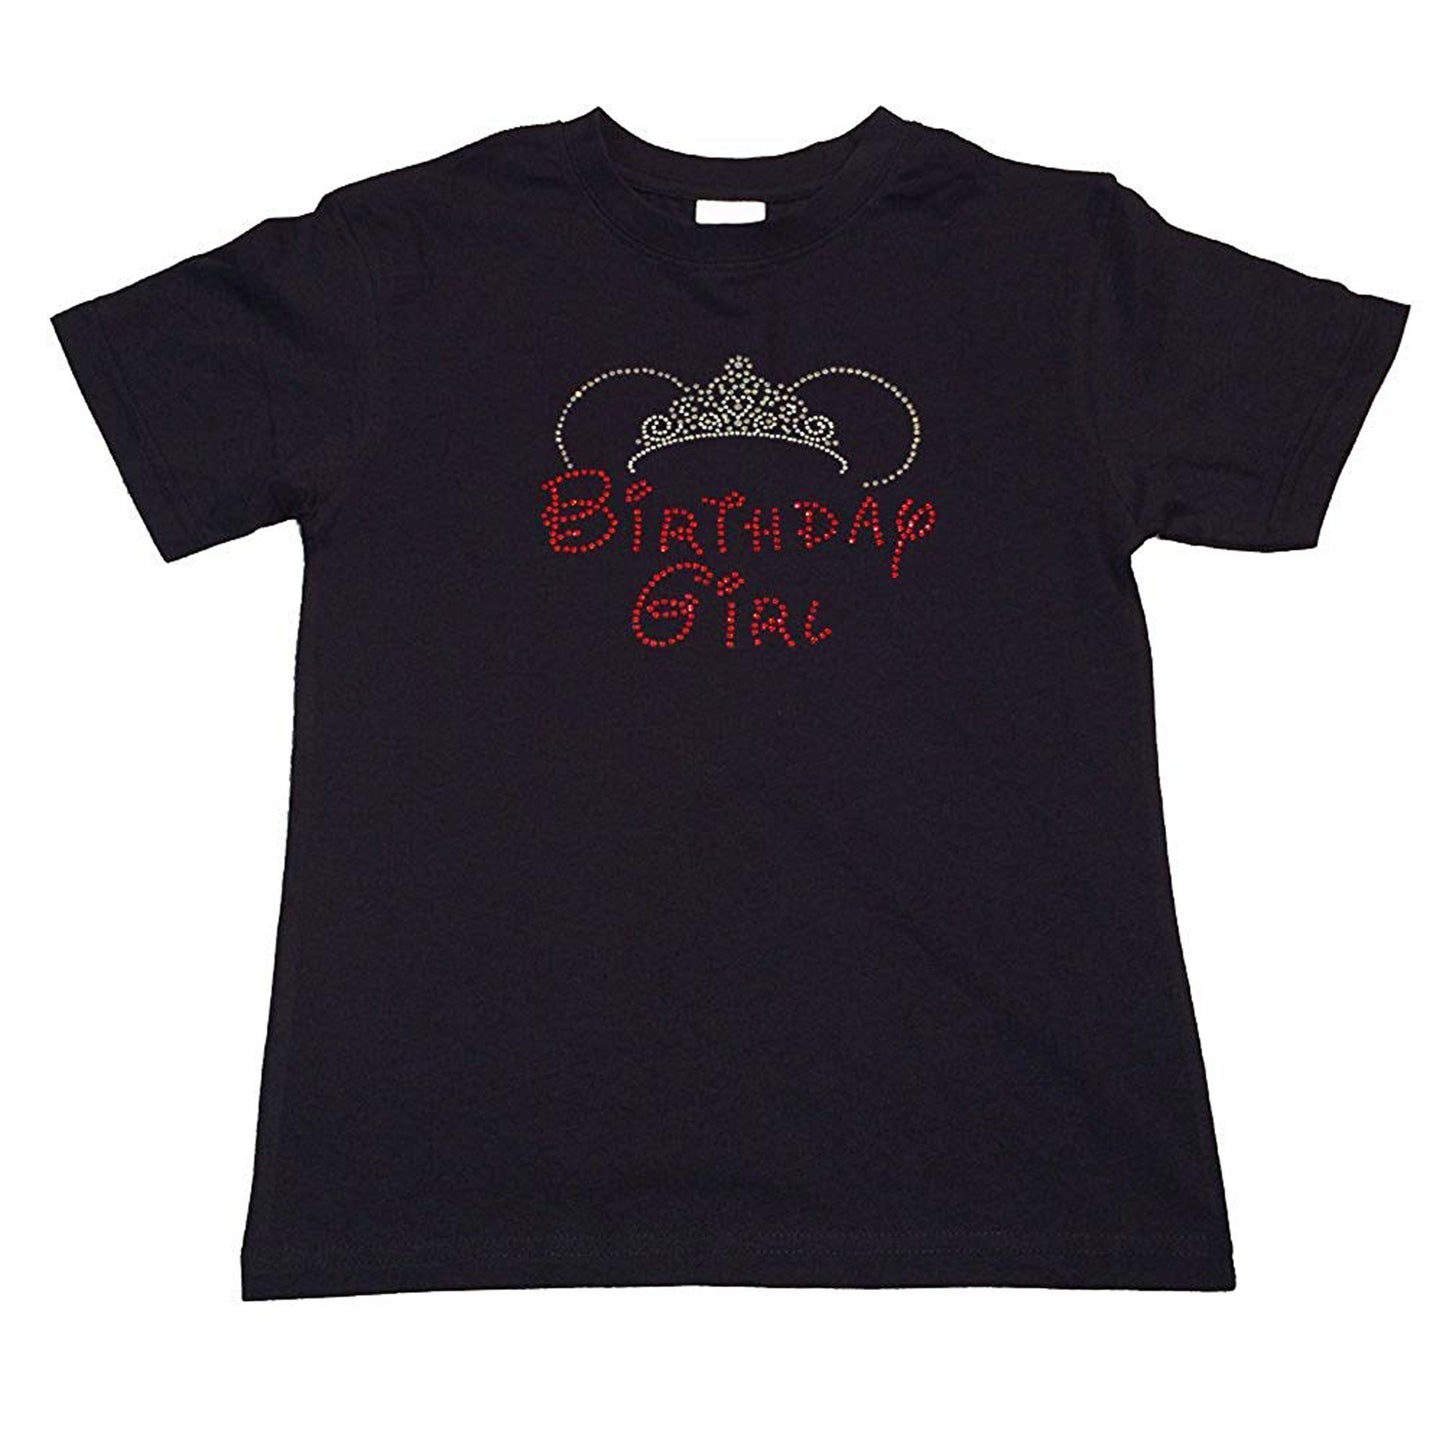 Girls Rhinestone T-Shirt " Red Birthday Girl w/ Tiara " Sizes 3 to 14 Available